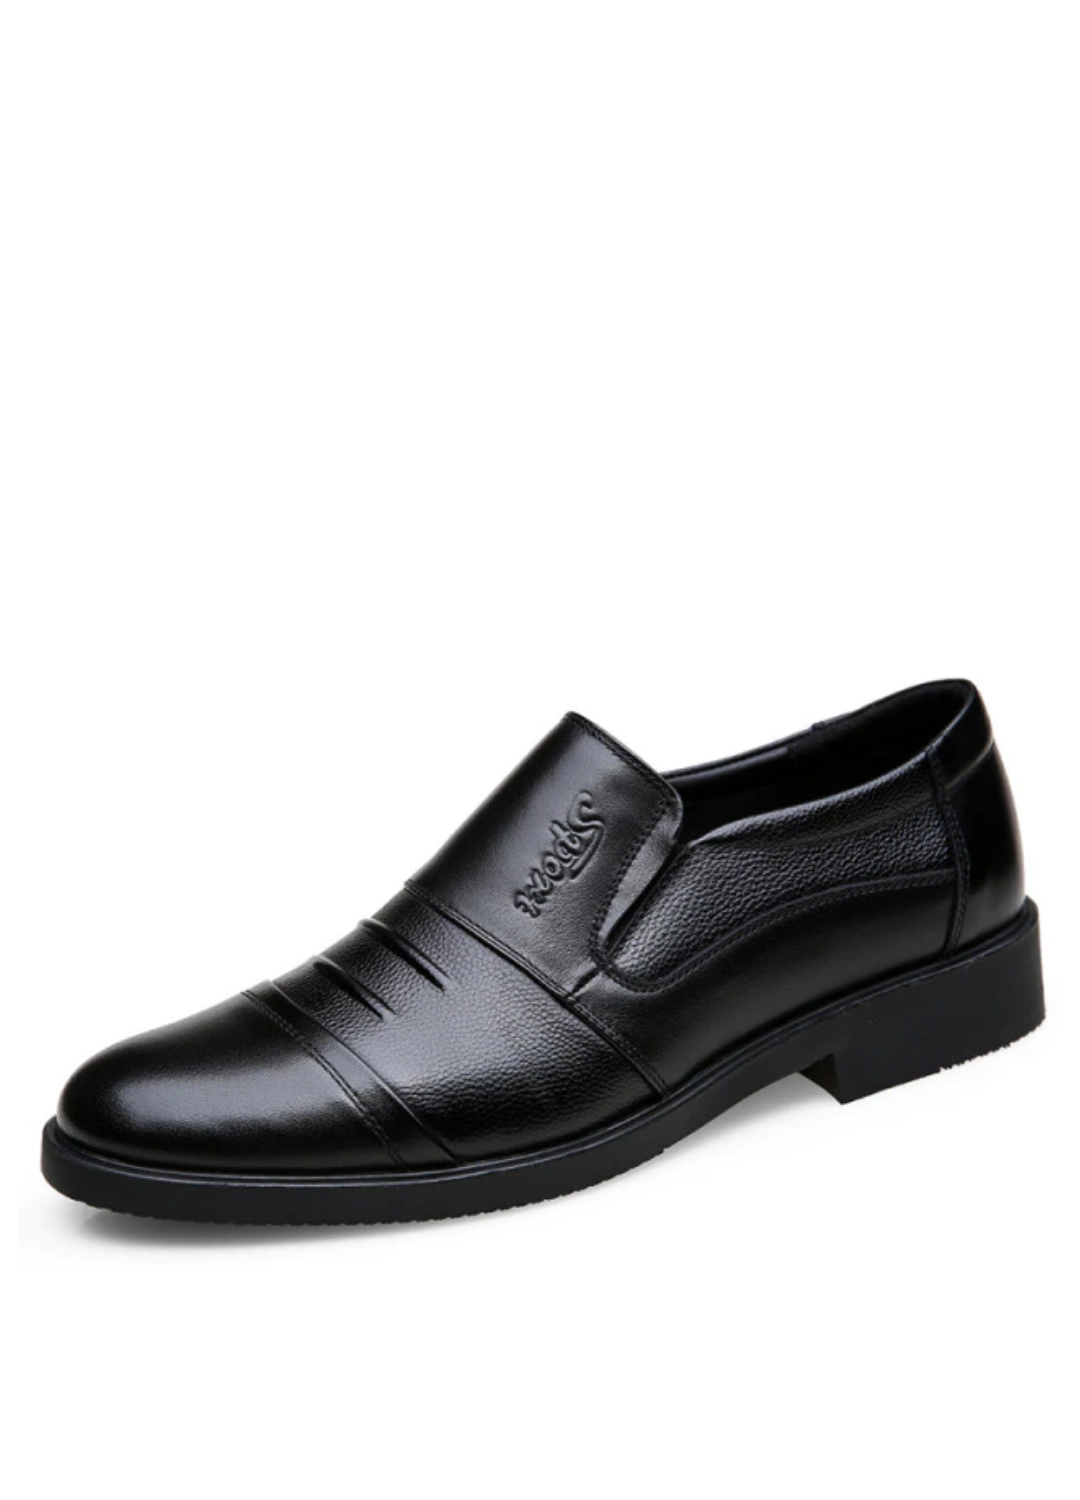 Gonzalo Men's Loafers Dress Shoes | Ultrasellershoes.com – USS® Shoes